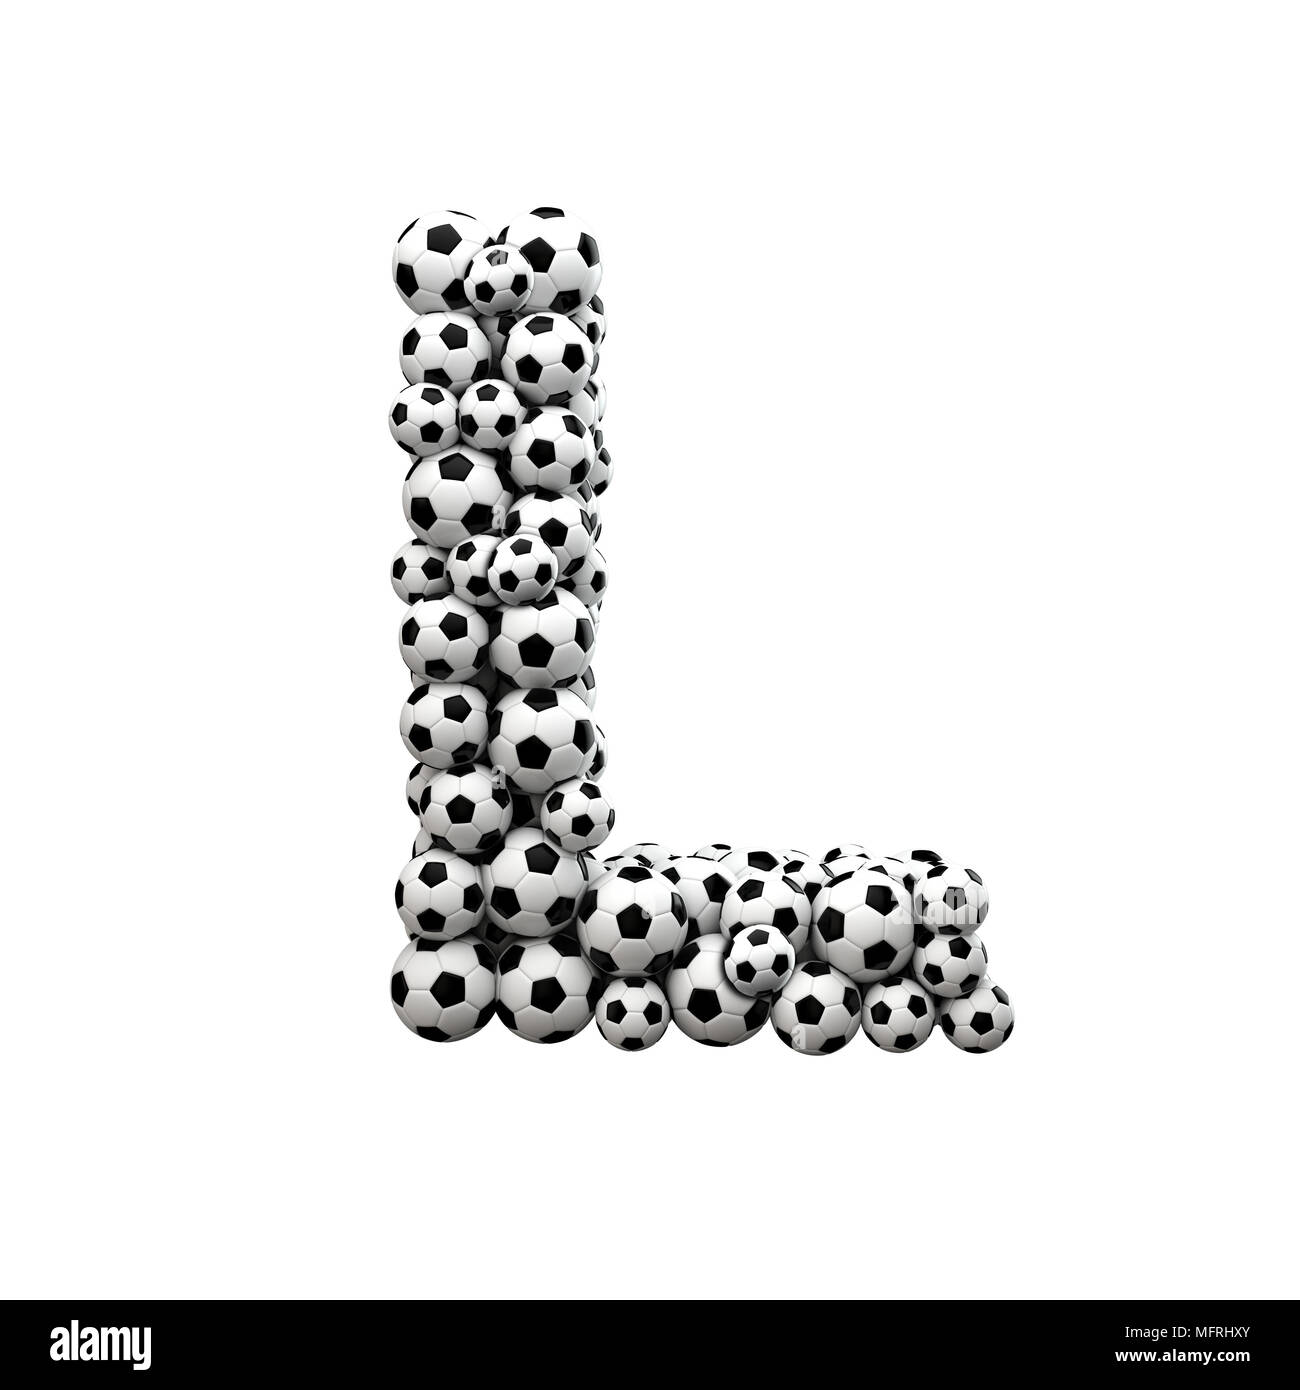 Mayúscula L font hechas a partir de una colección de balones de fútbol. 3D Rendering Foto de stock